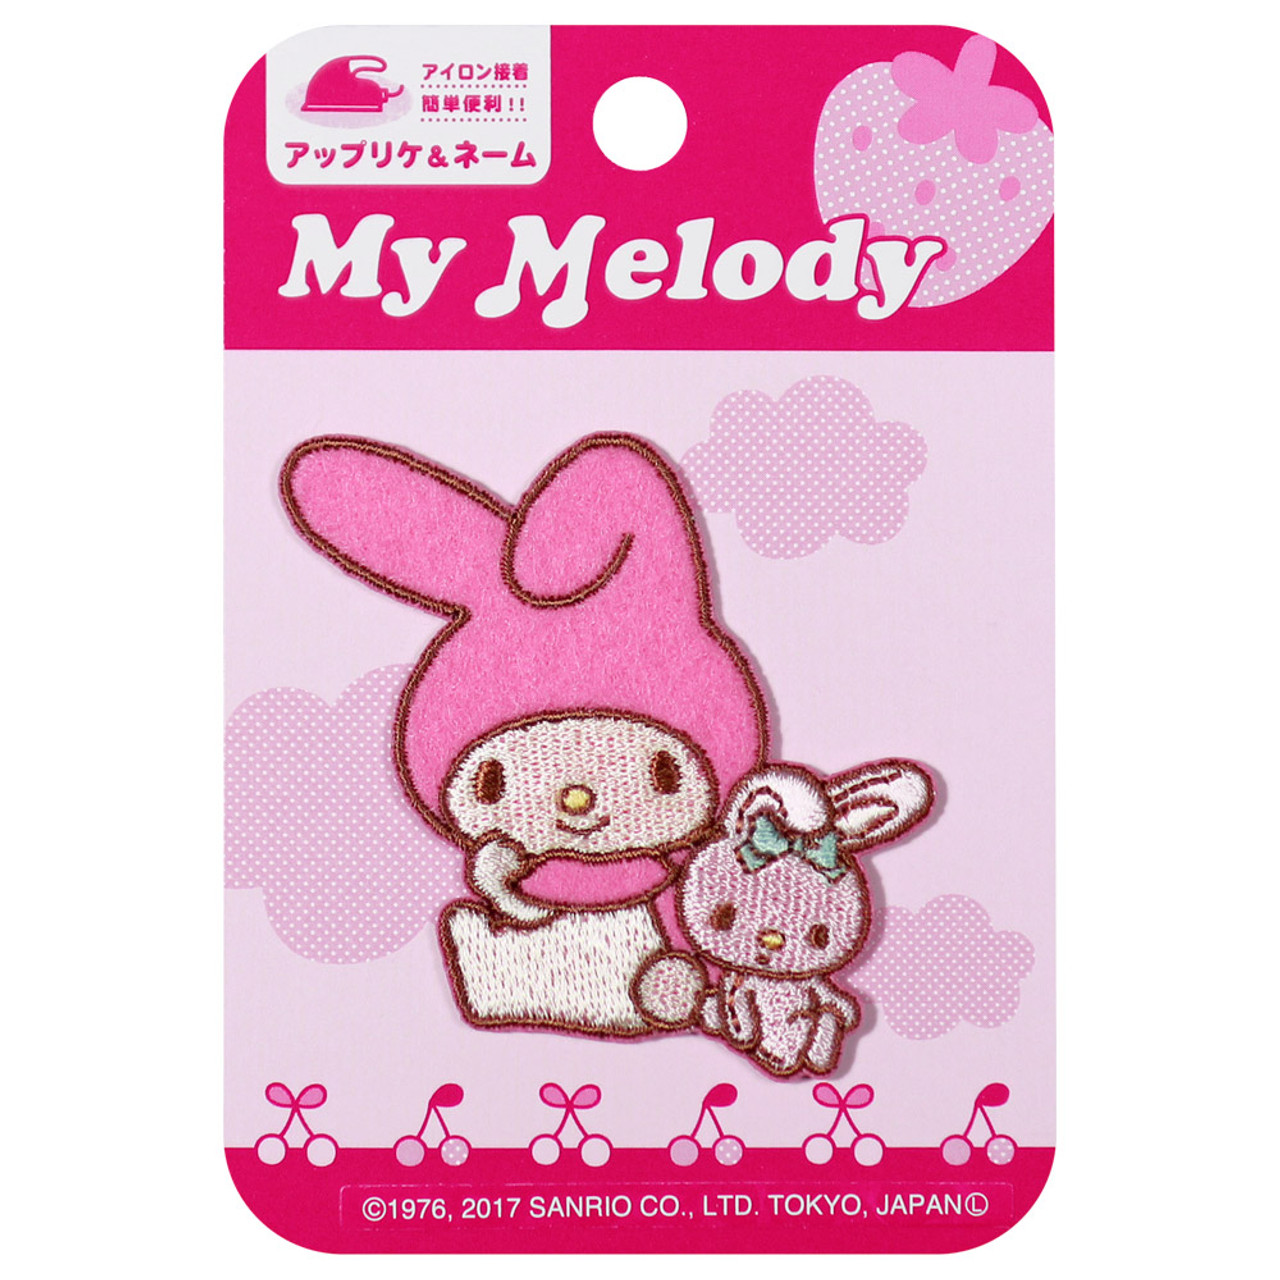 NEW Hello Kitty Sanrio My Melody Bunny 40 Mini Stickers in Case NEW